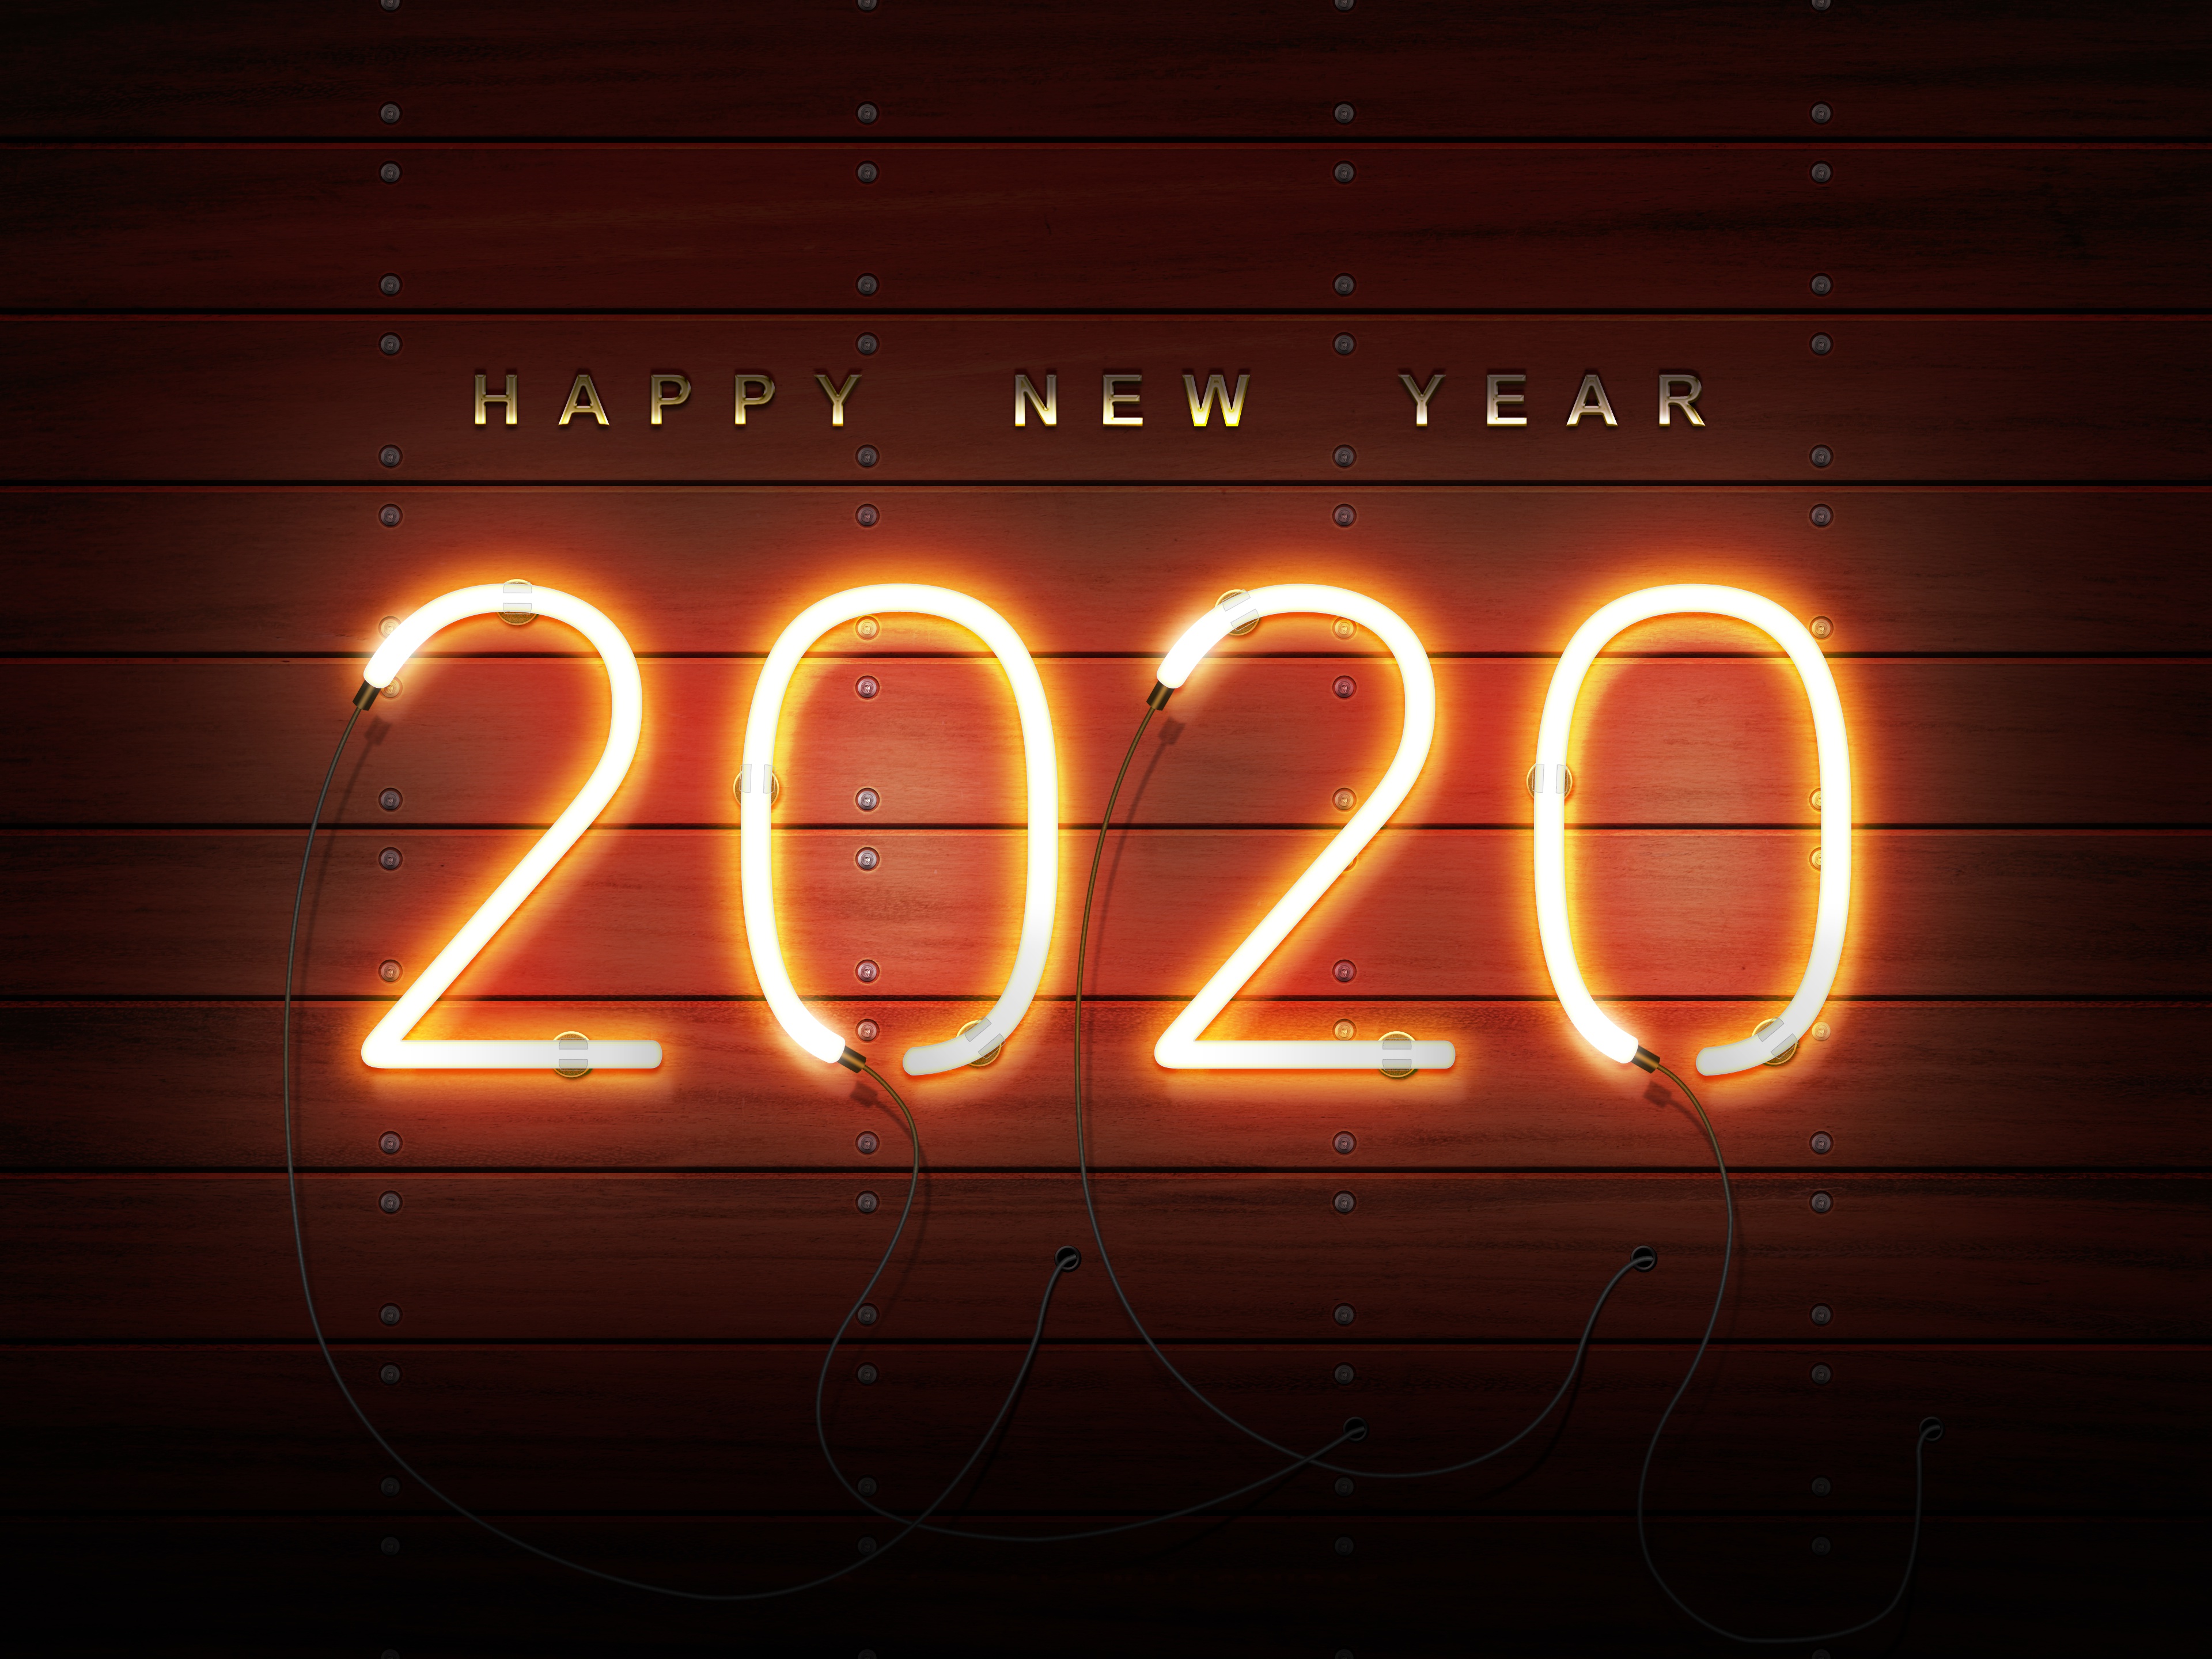 New Year 2020 4k Ultra HD Wallpaper Background Image 3840x2880